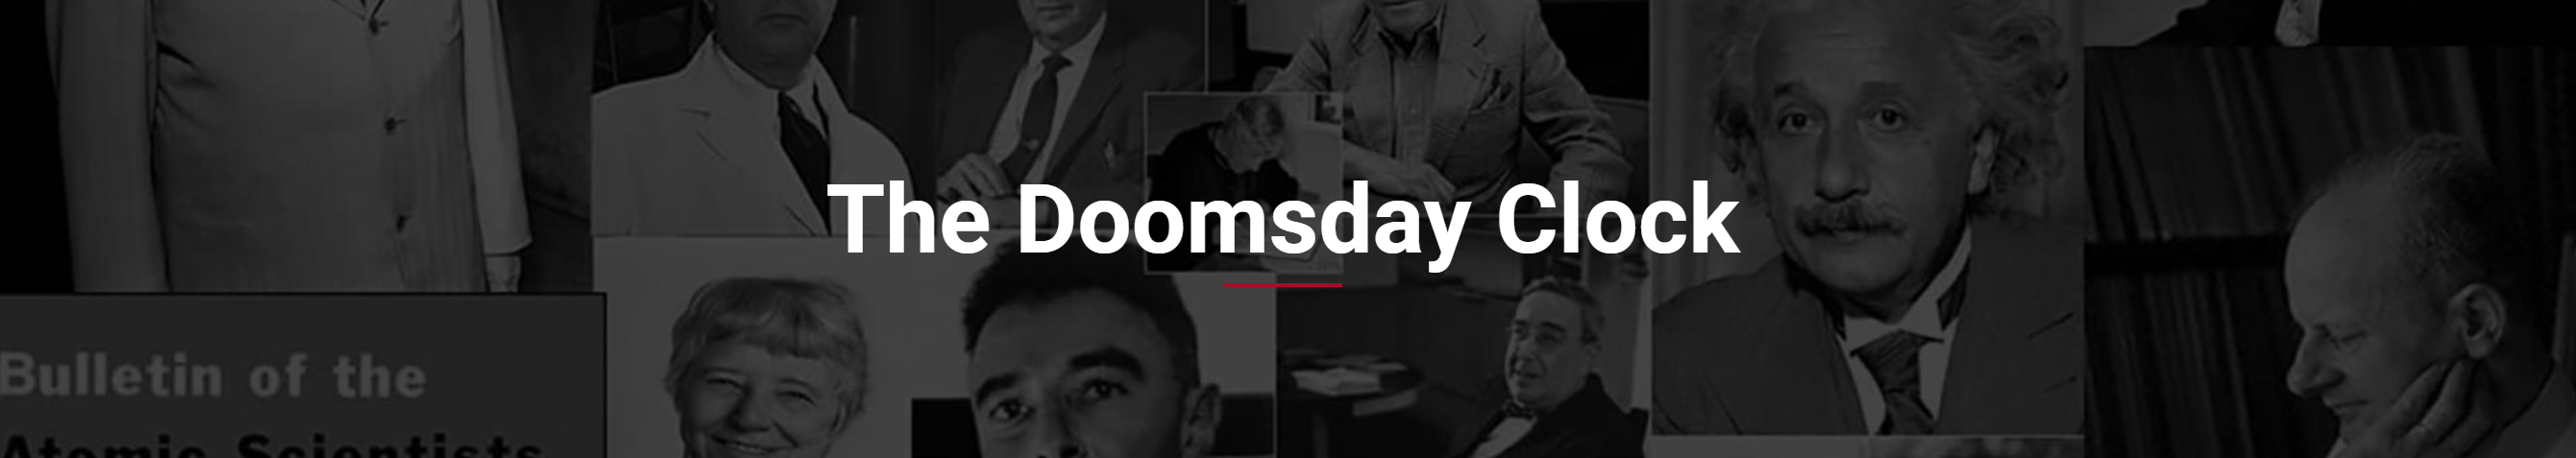 doomsday clock